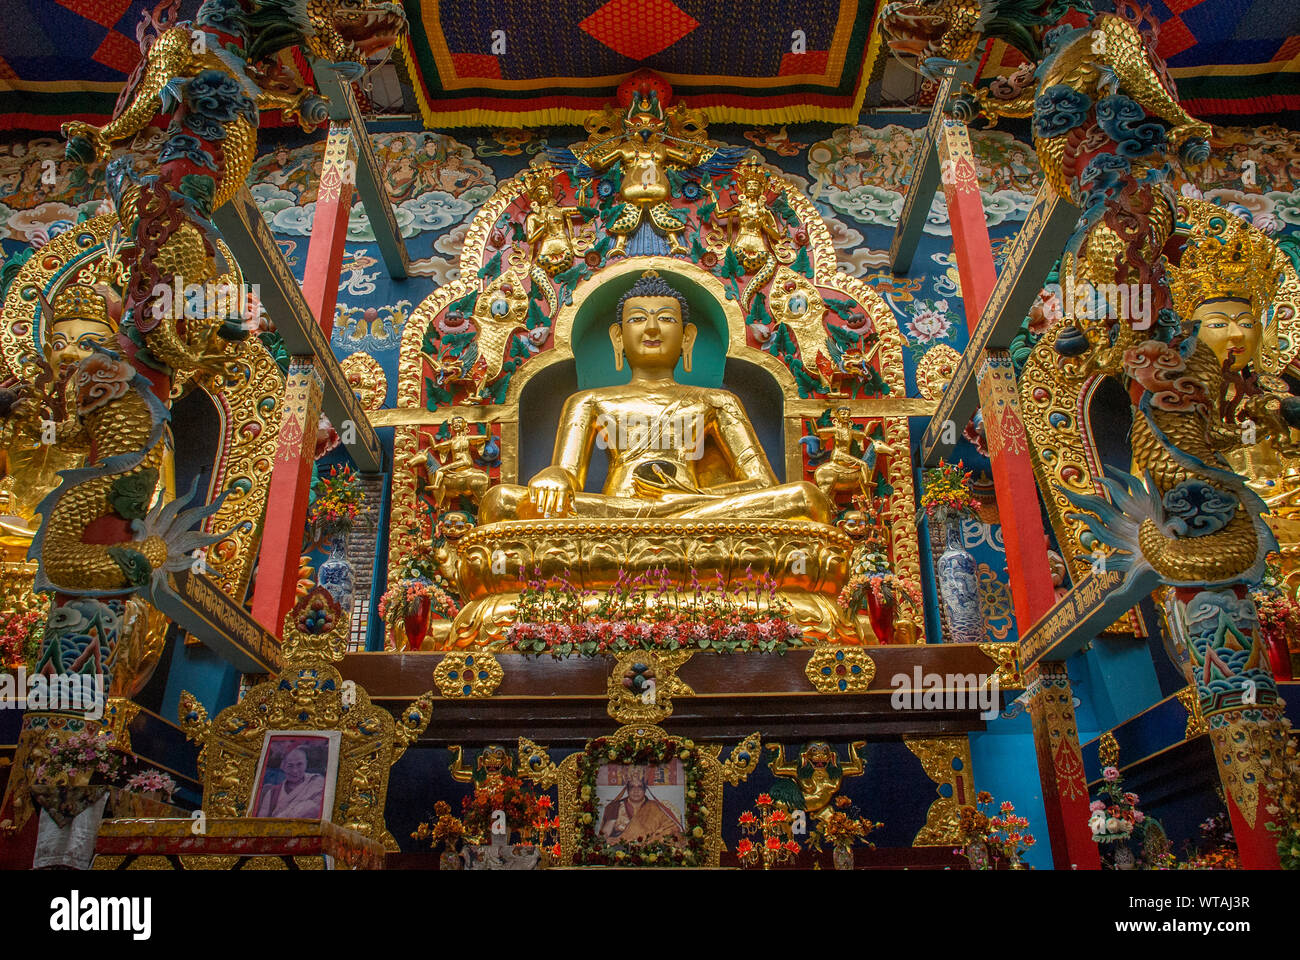 Golden Buddha Statue in Lotus Position Stockfoto